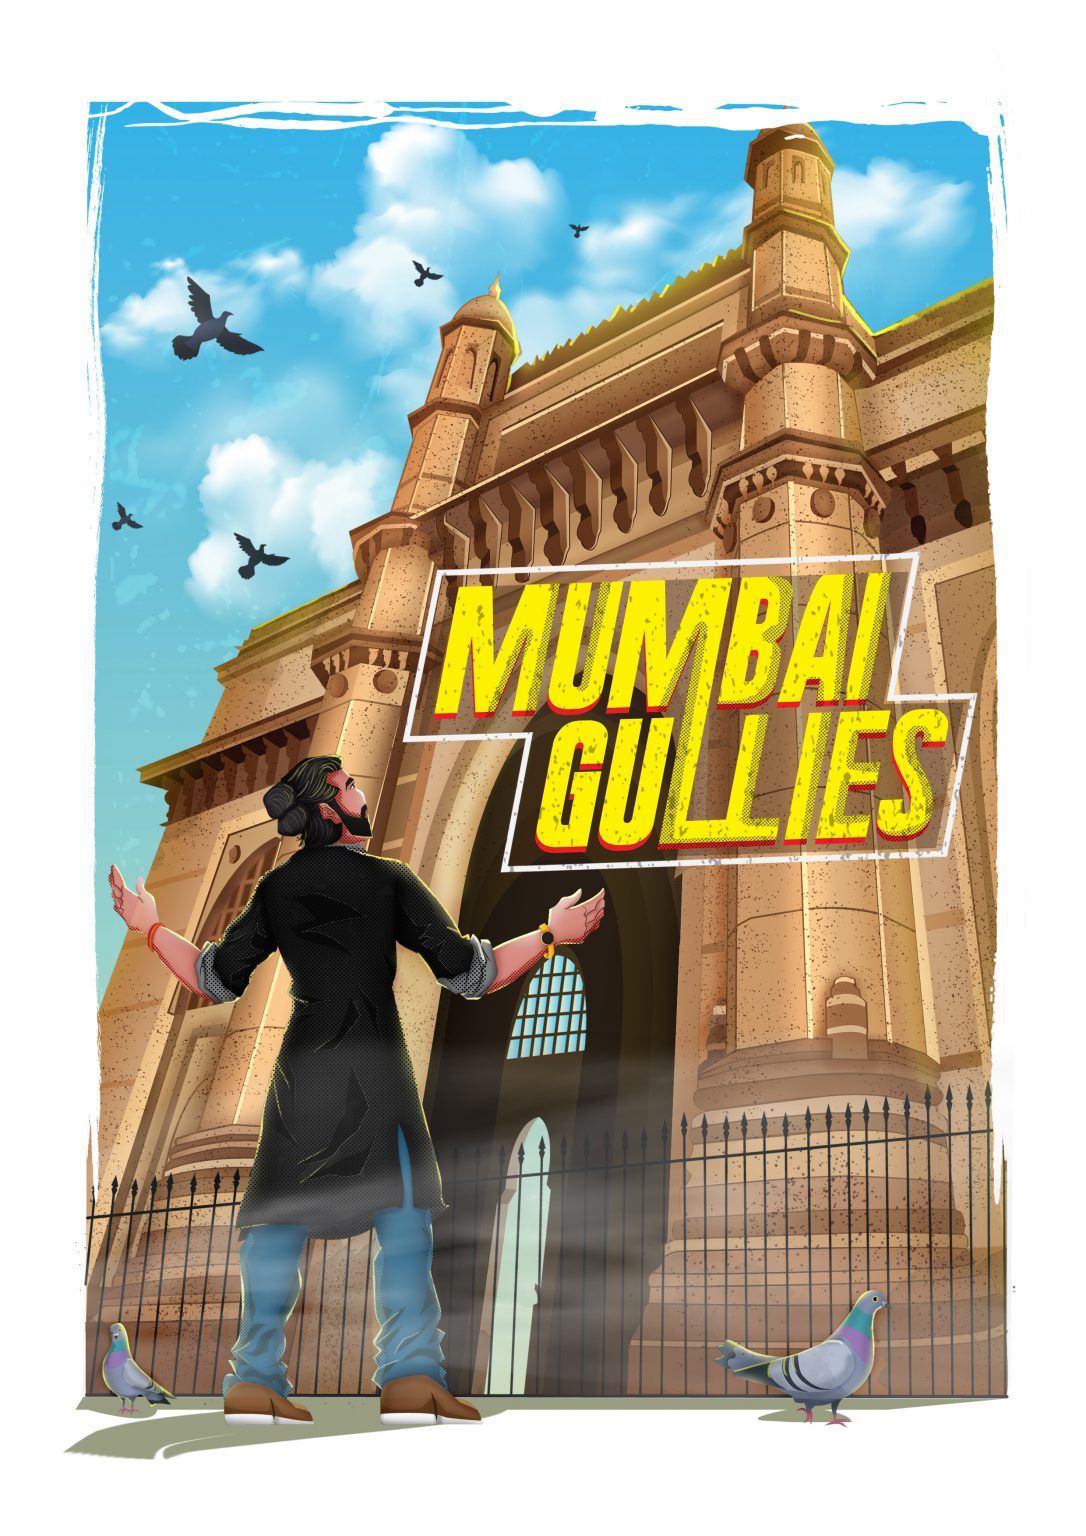 Mumbai Gullies Game 2021 Wallpapers